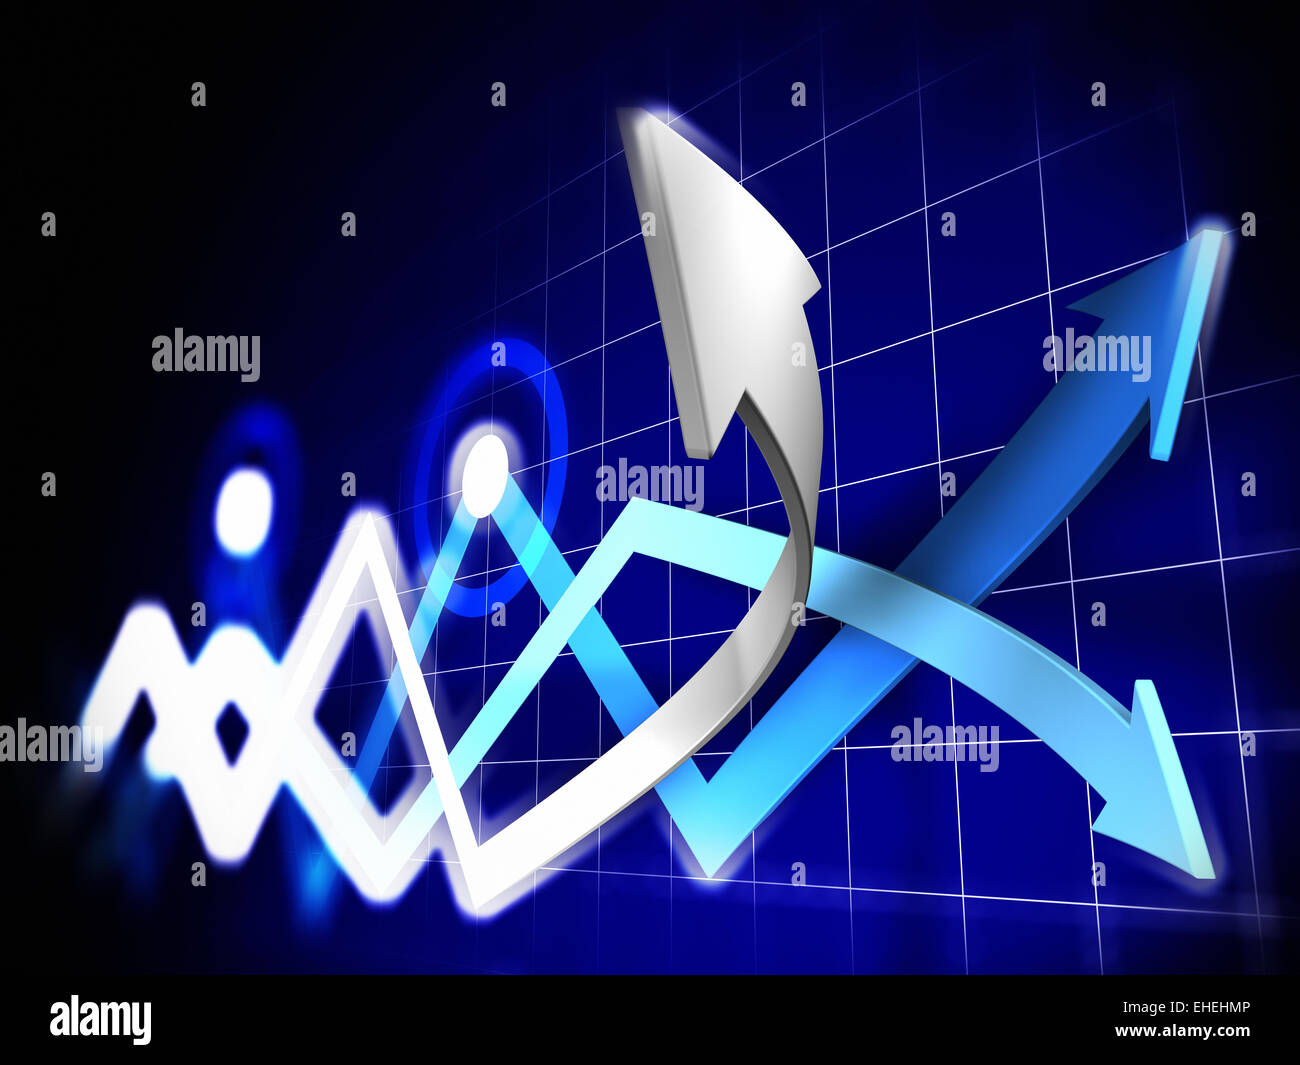 Stock Charts Stock Photo